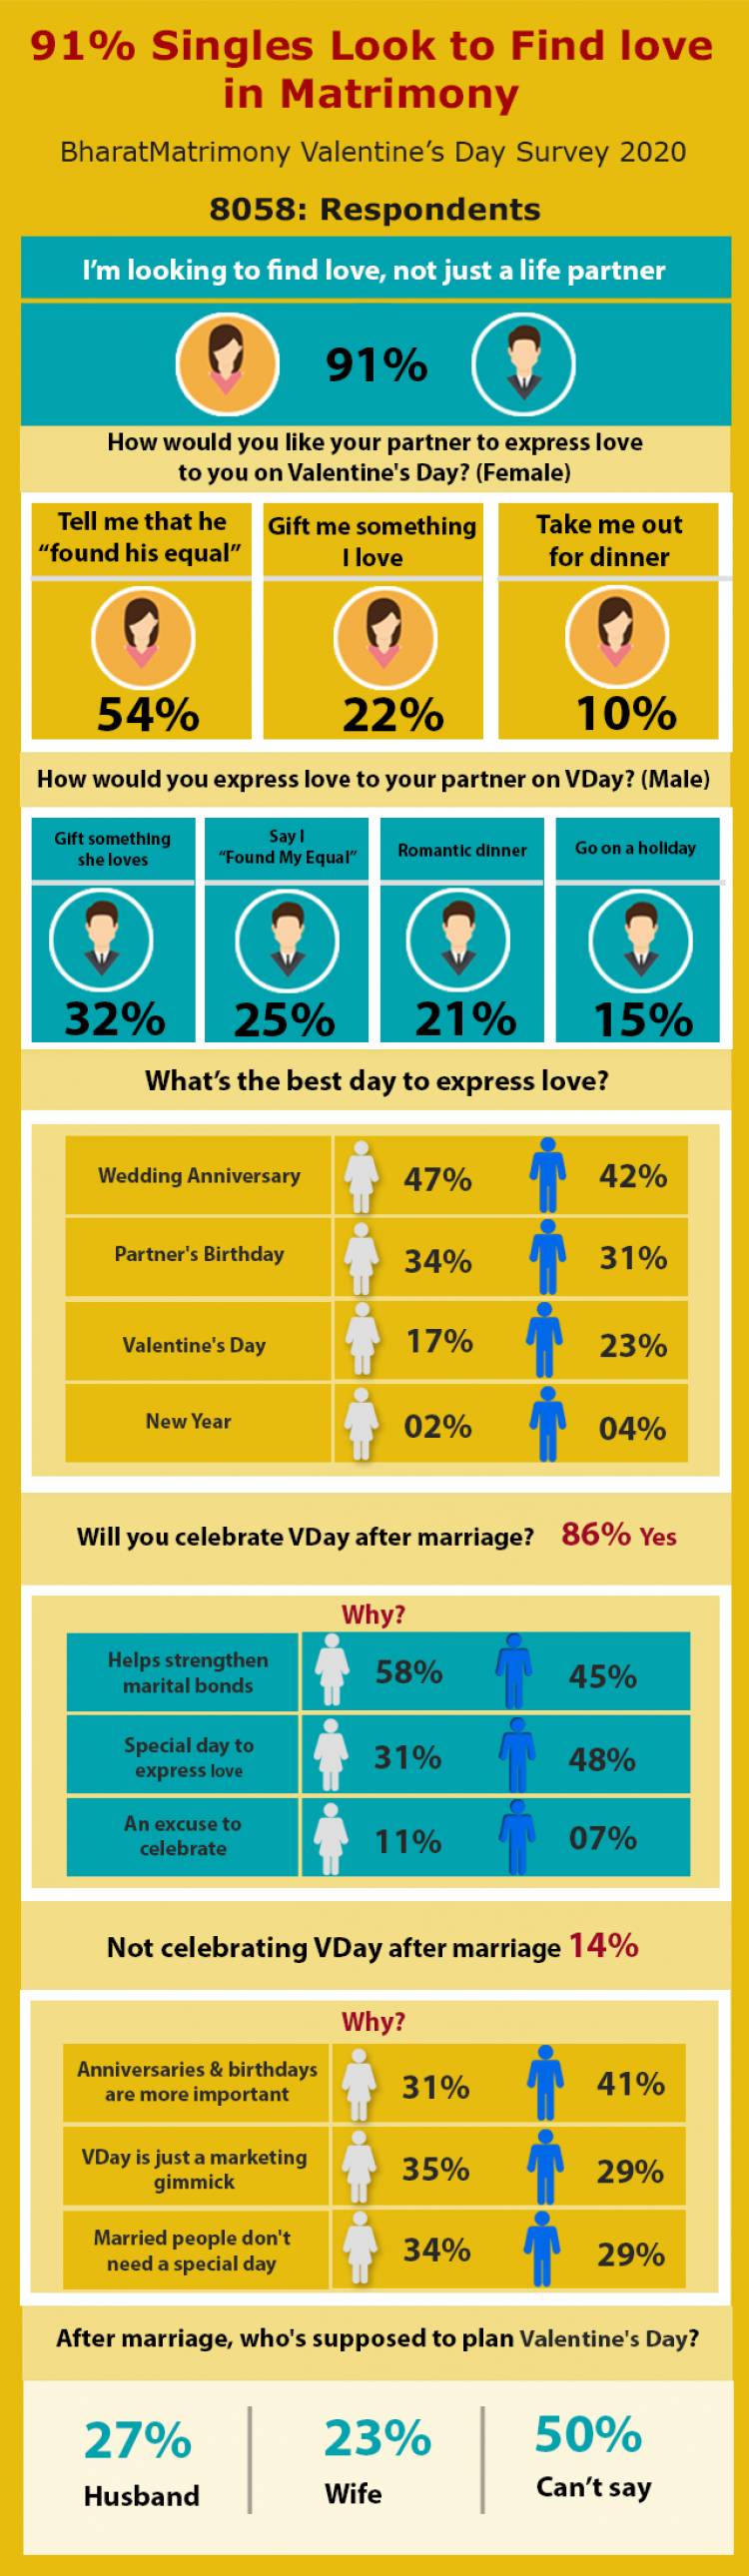 91% Indian Singles Look for Love in Matrimony: BharatMatrimony Valentine’s Day Survey